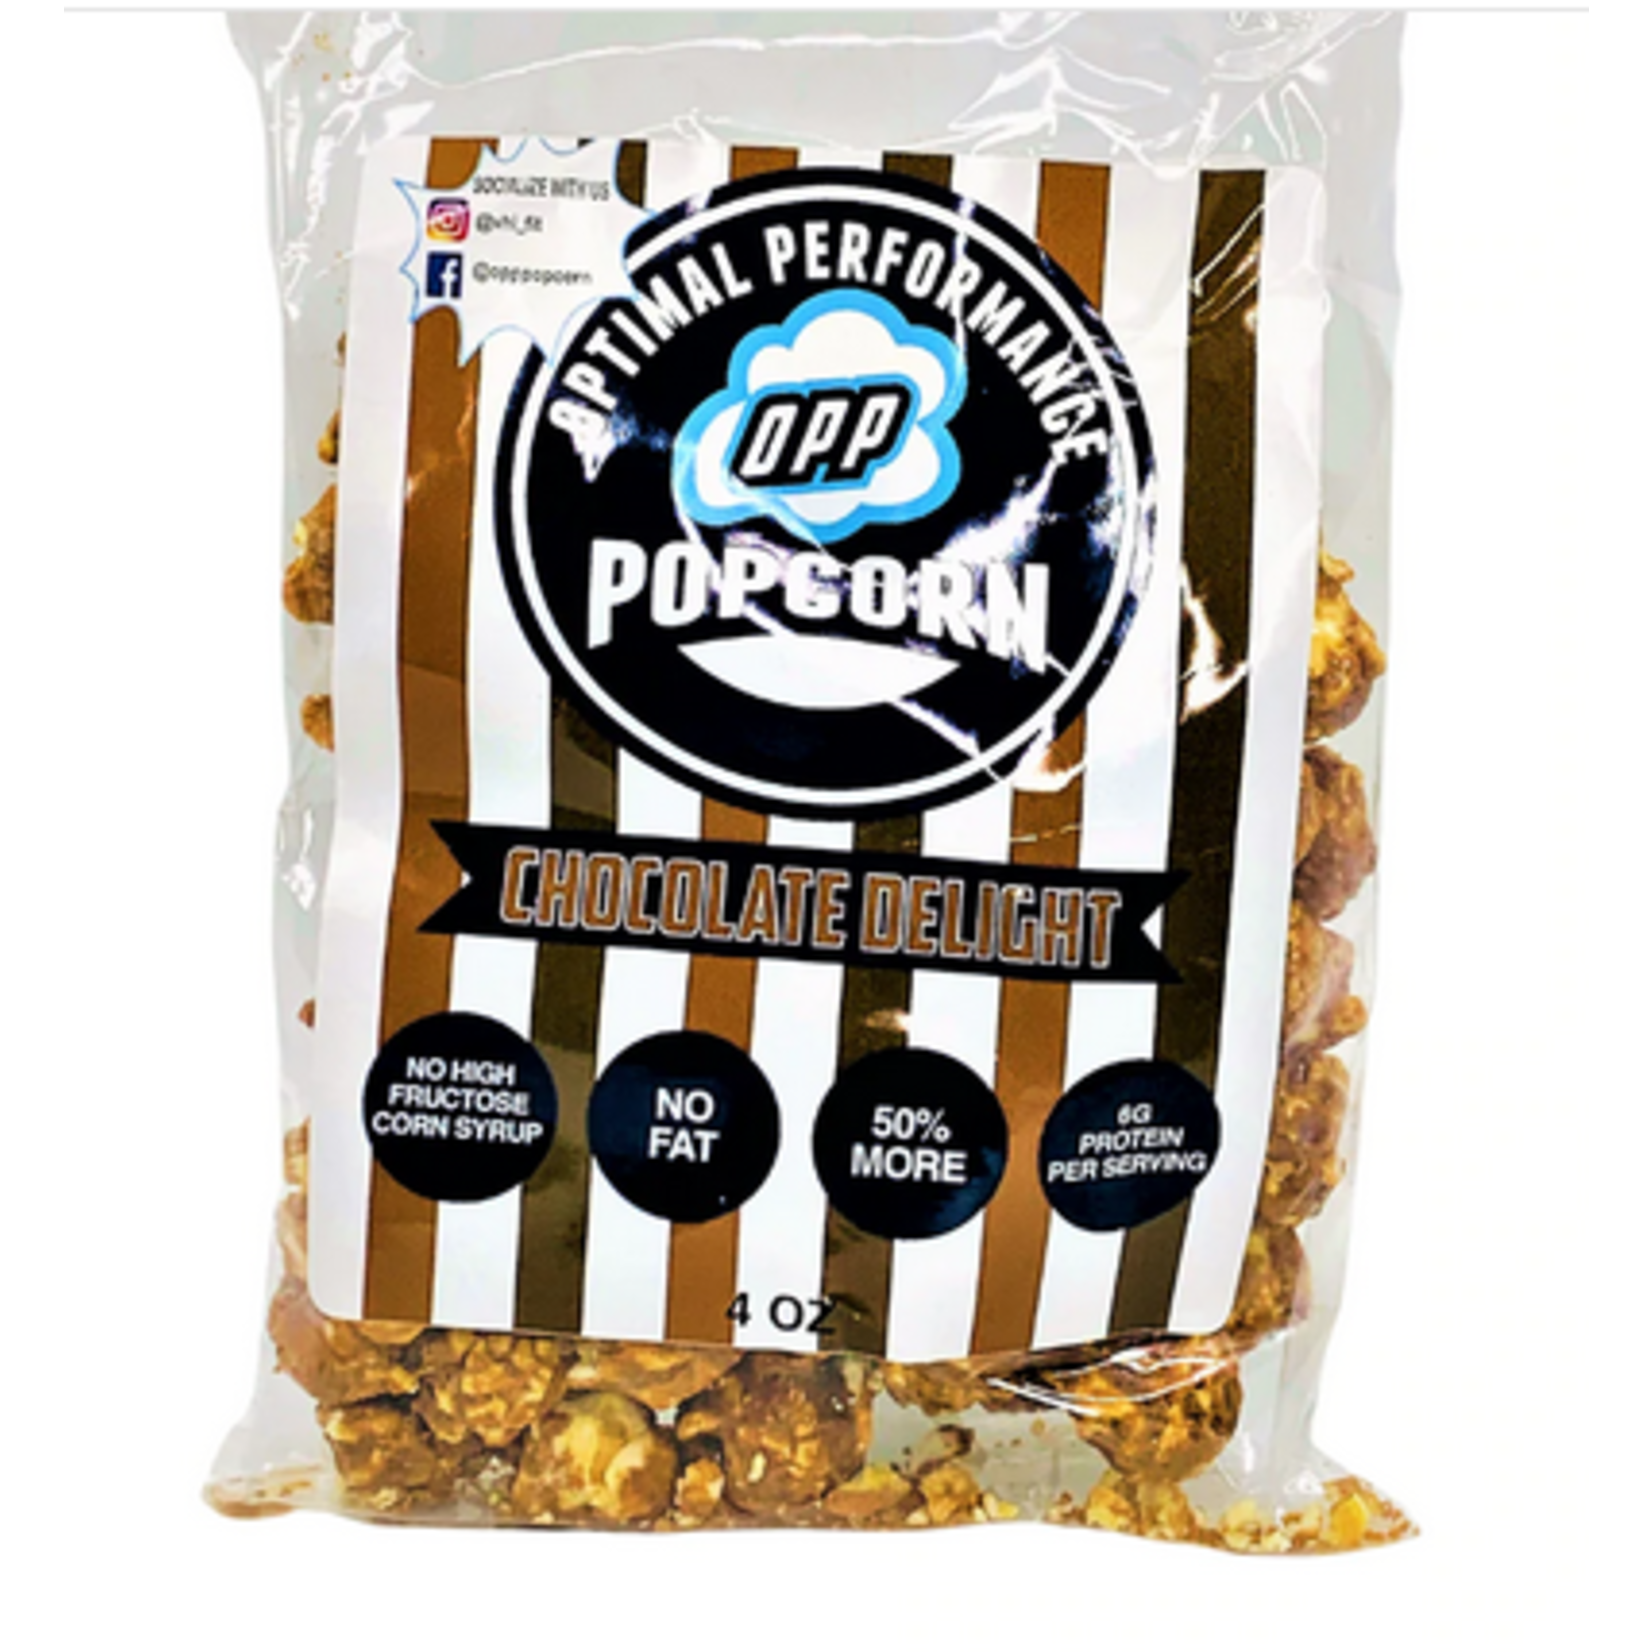 VHI Protein popcorn Chocolate Delight